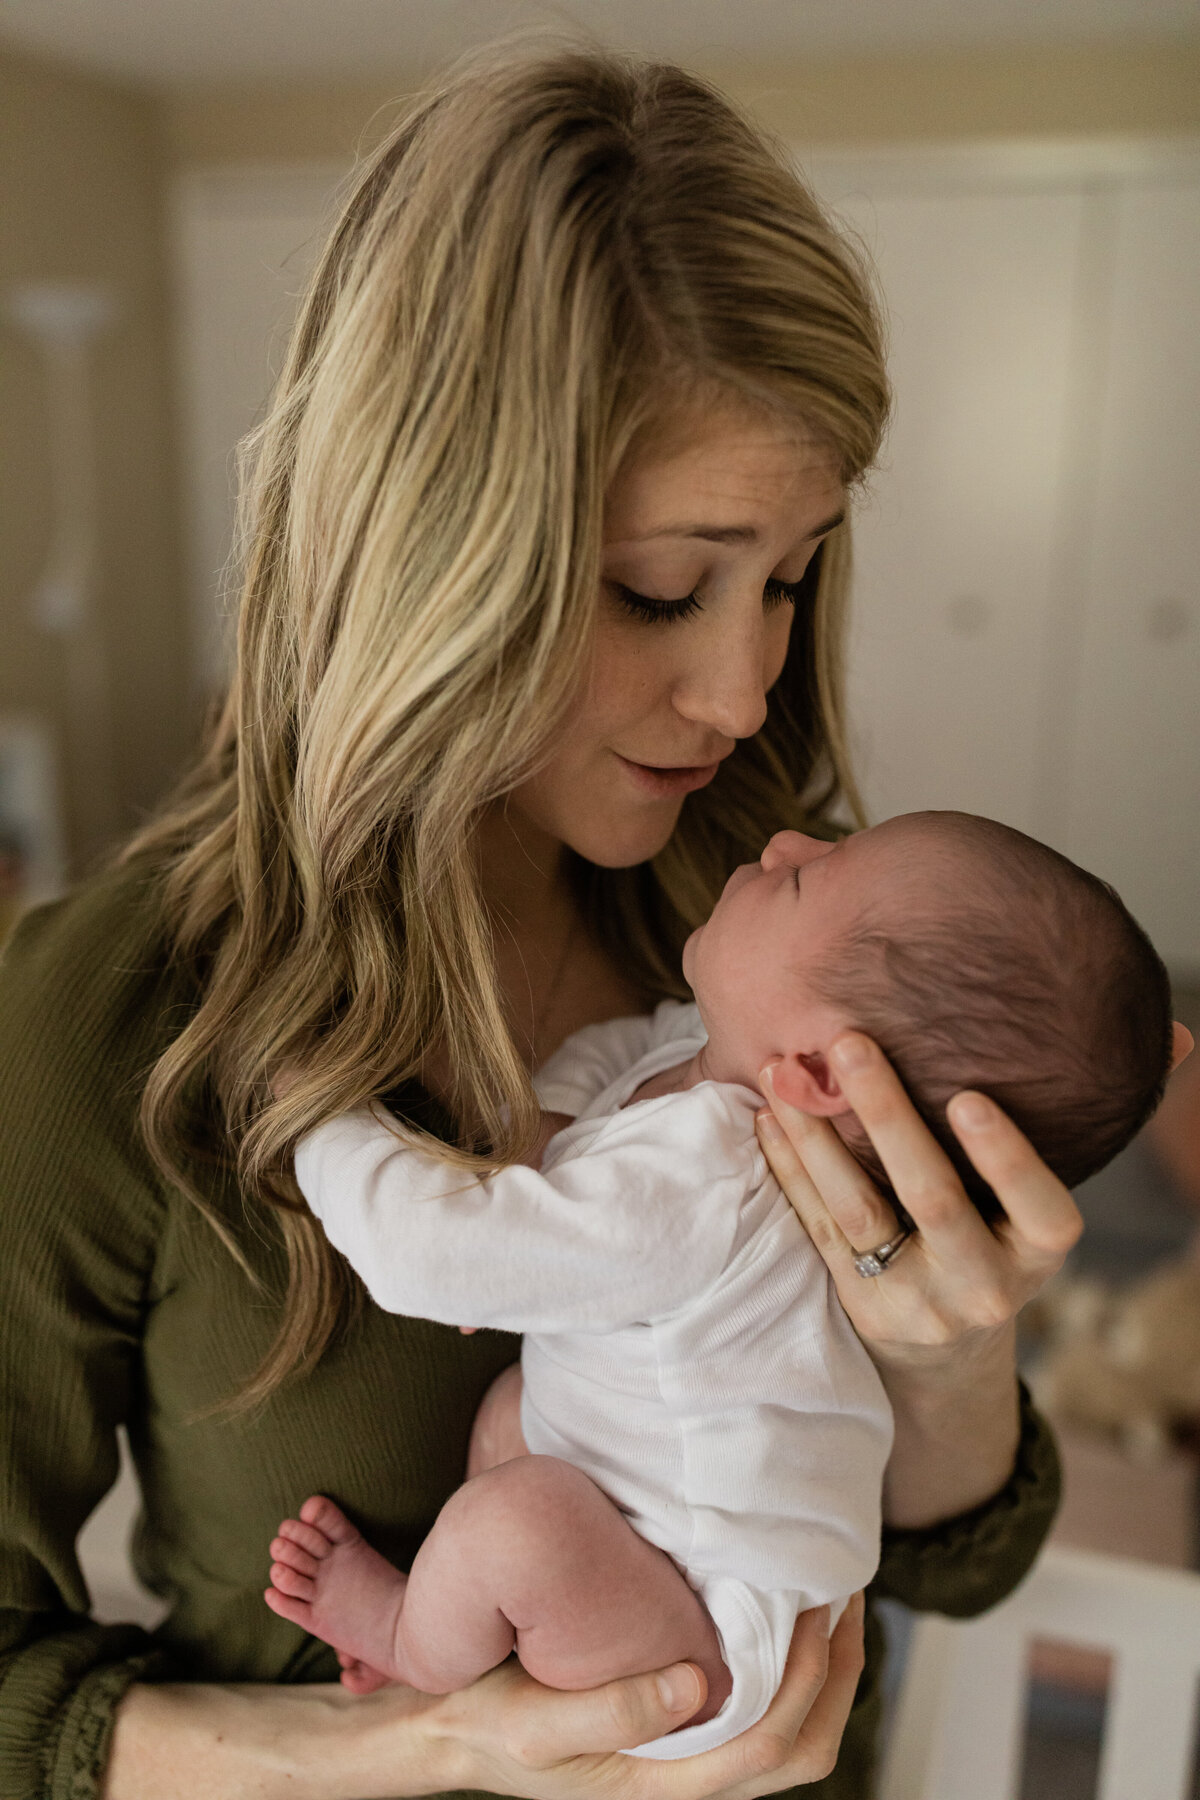 mom holding newborn baby boy in nursery